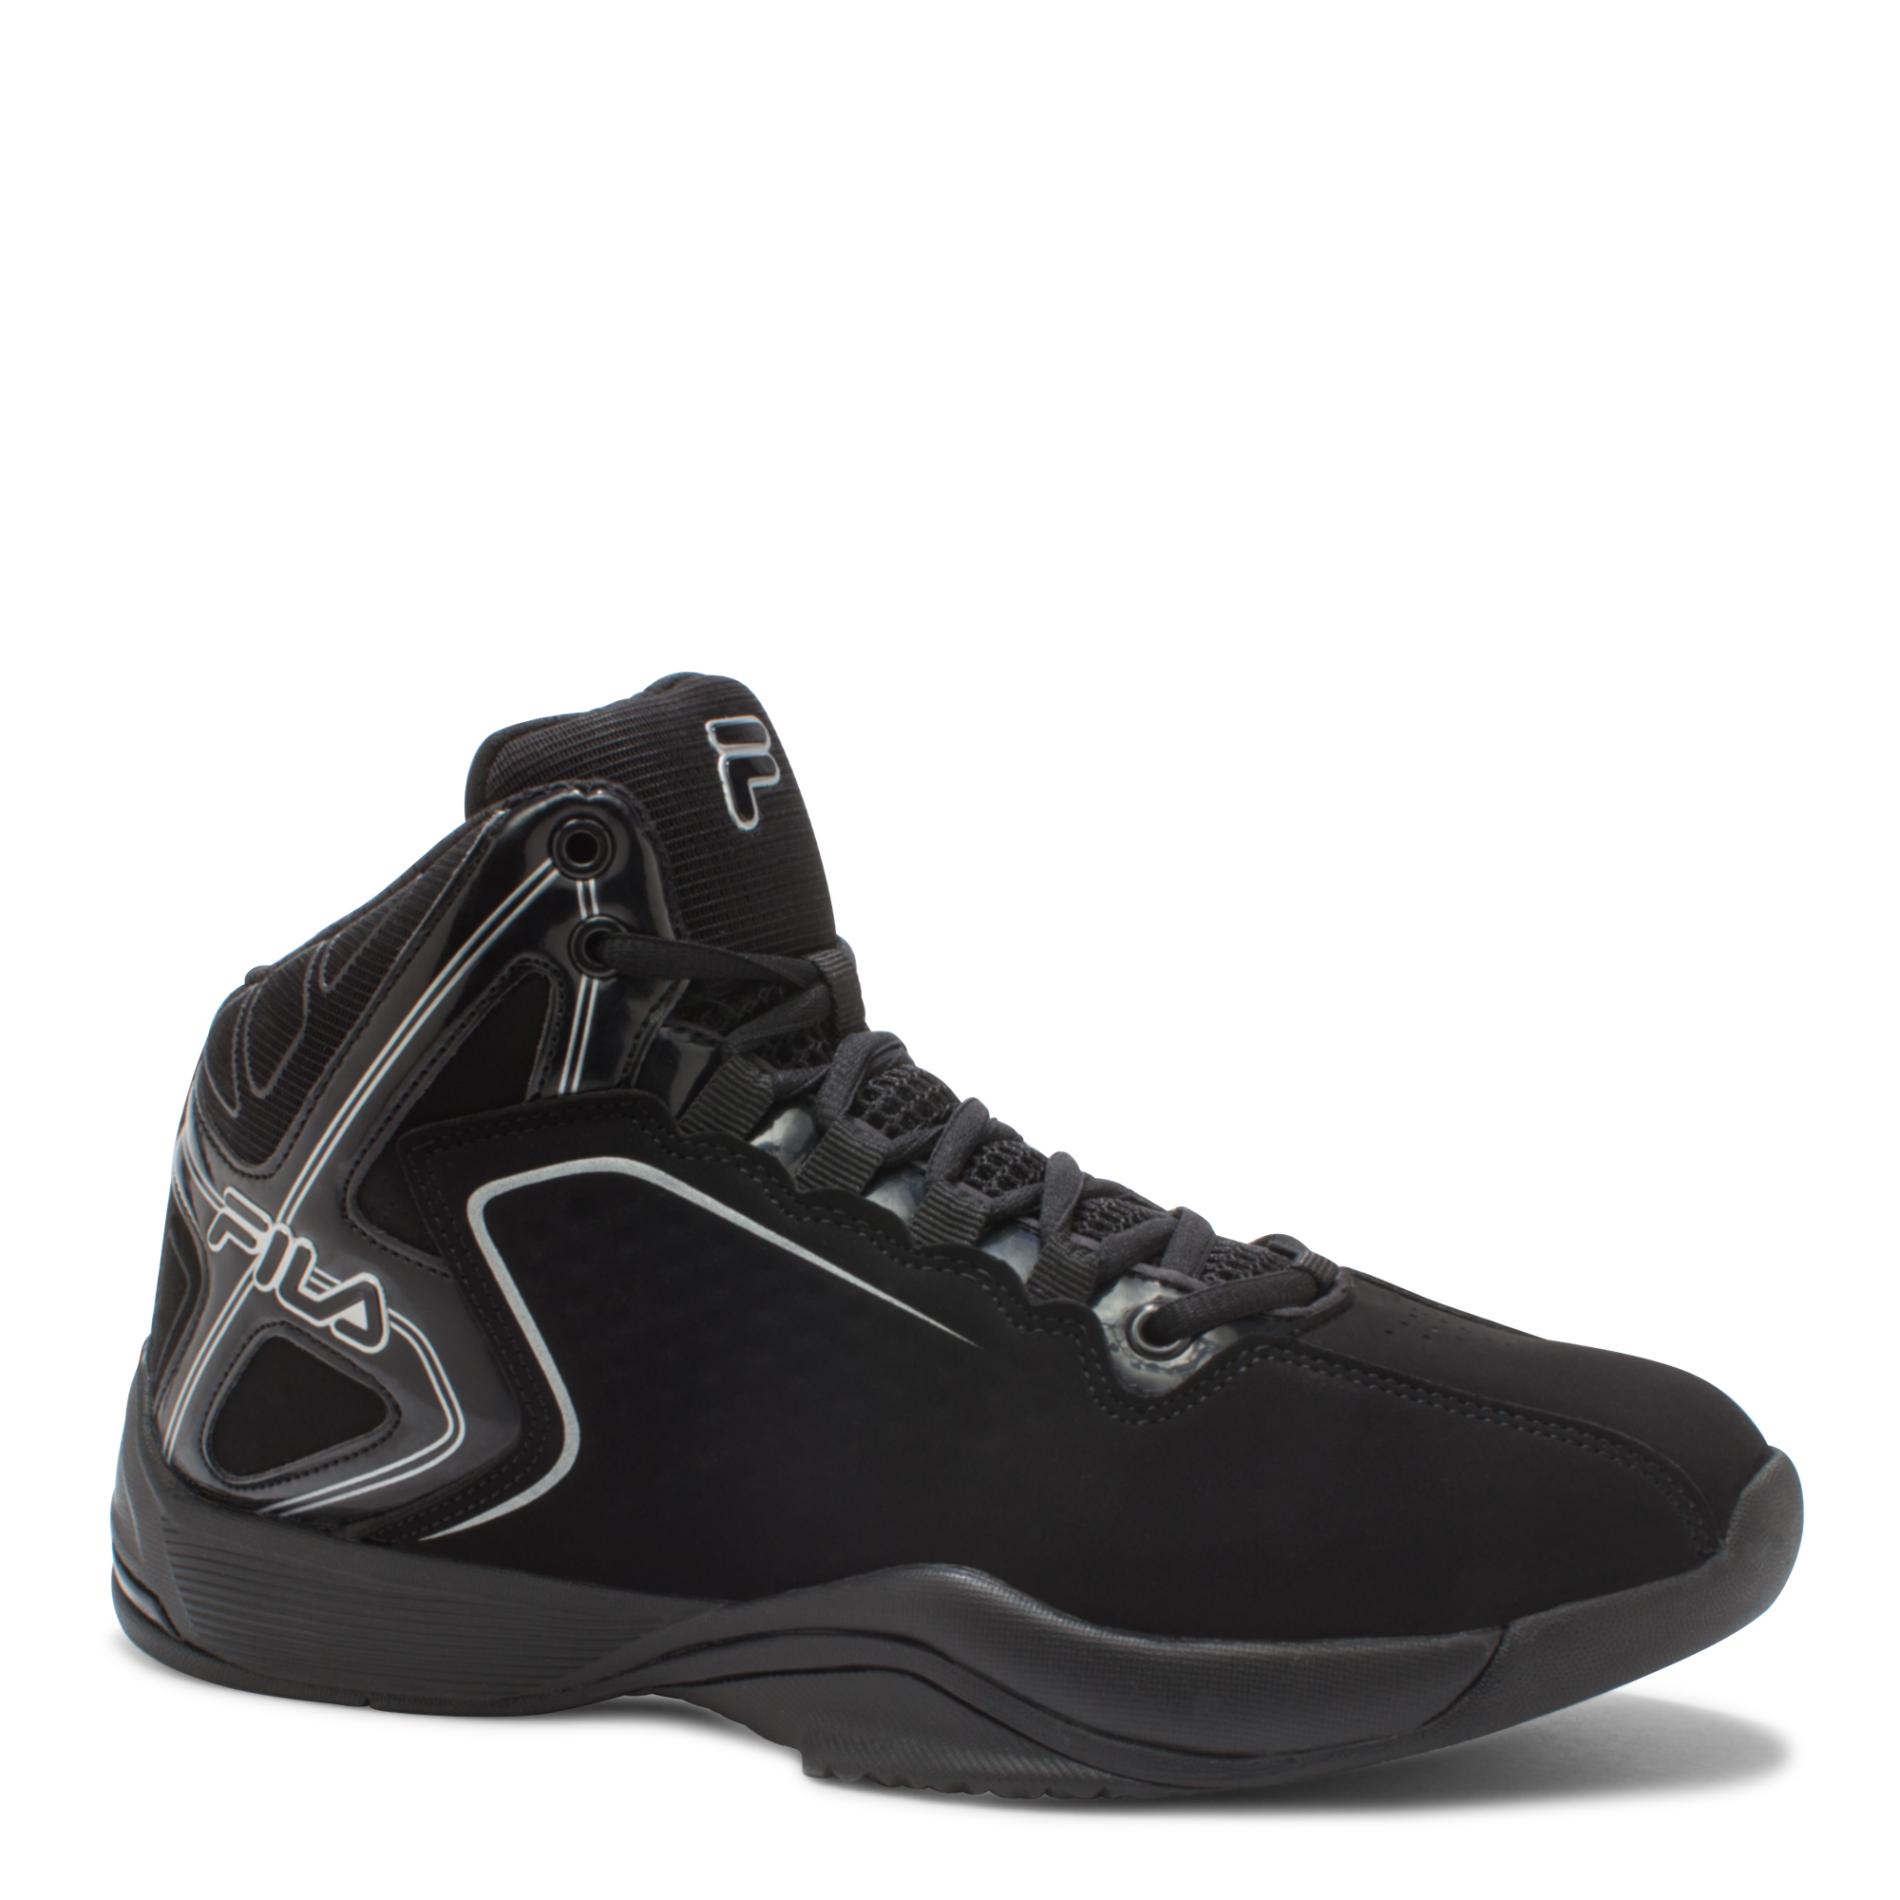 Fila Men's Big Bang 4 Black/Gray Basketball Shoe